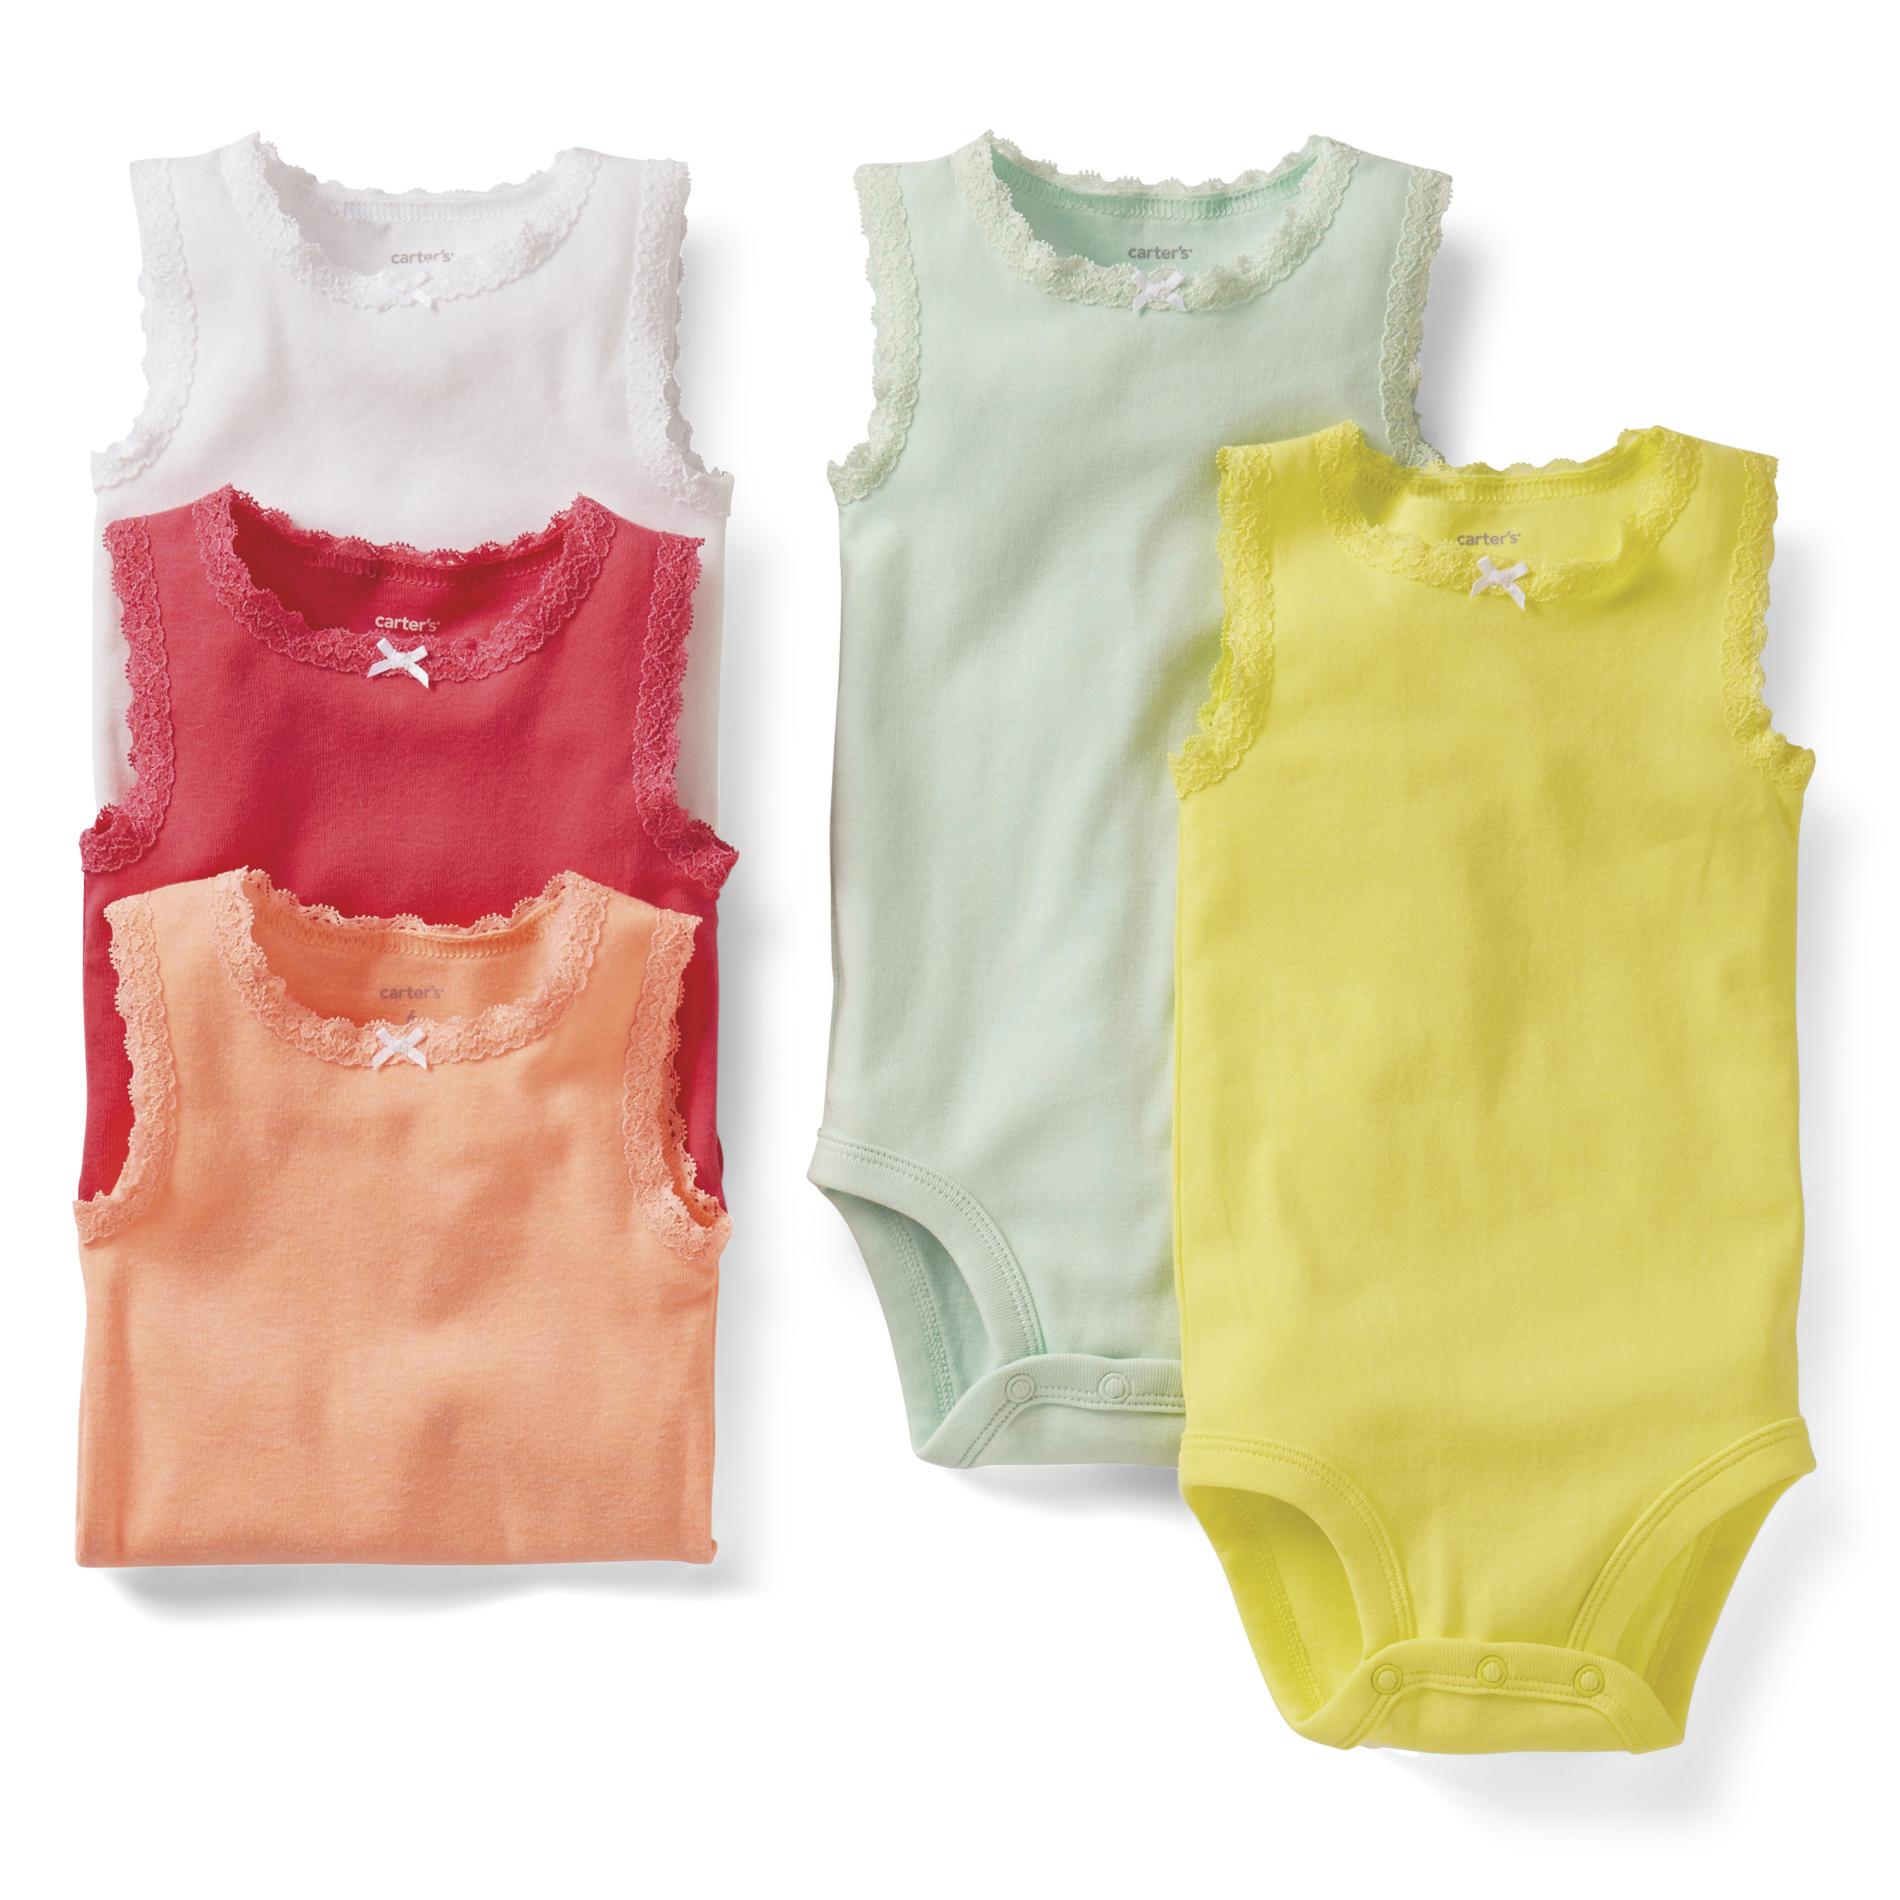 Carter's Newborn & Infant Girl's 5-Pack Sleeveless Bodysuits - Lace Trim